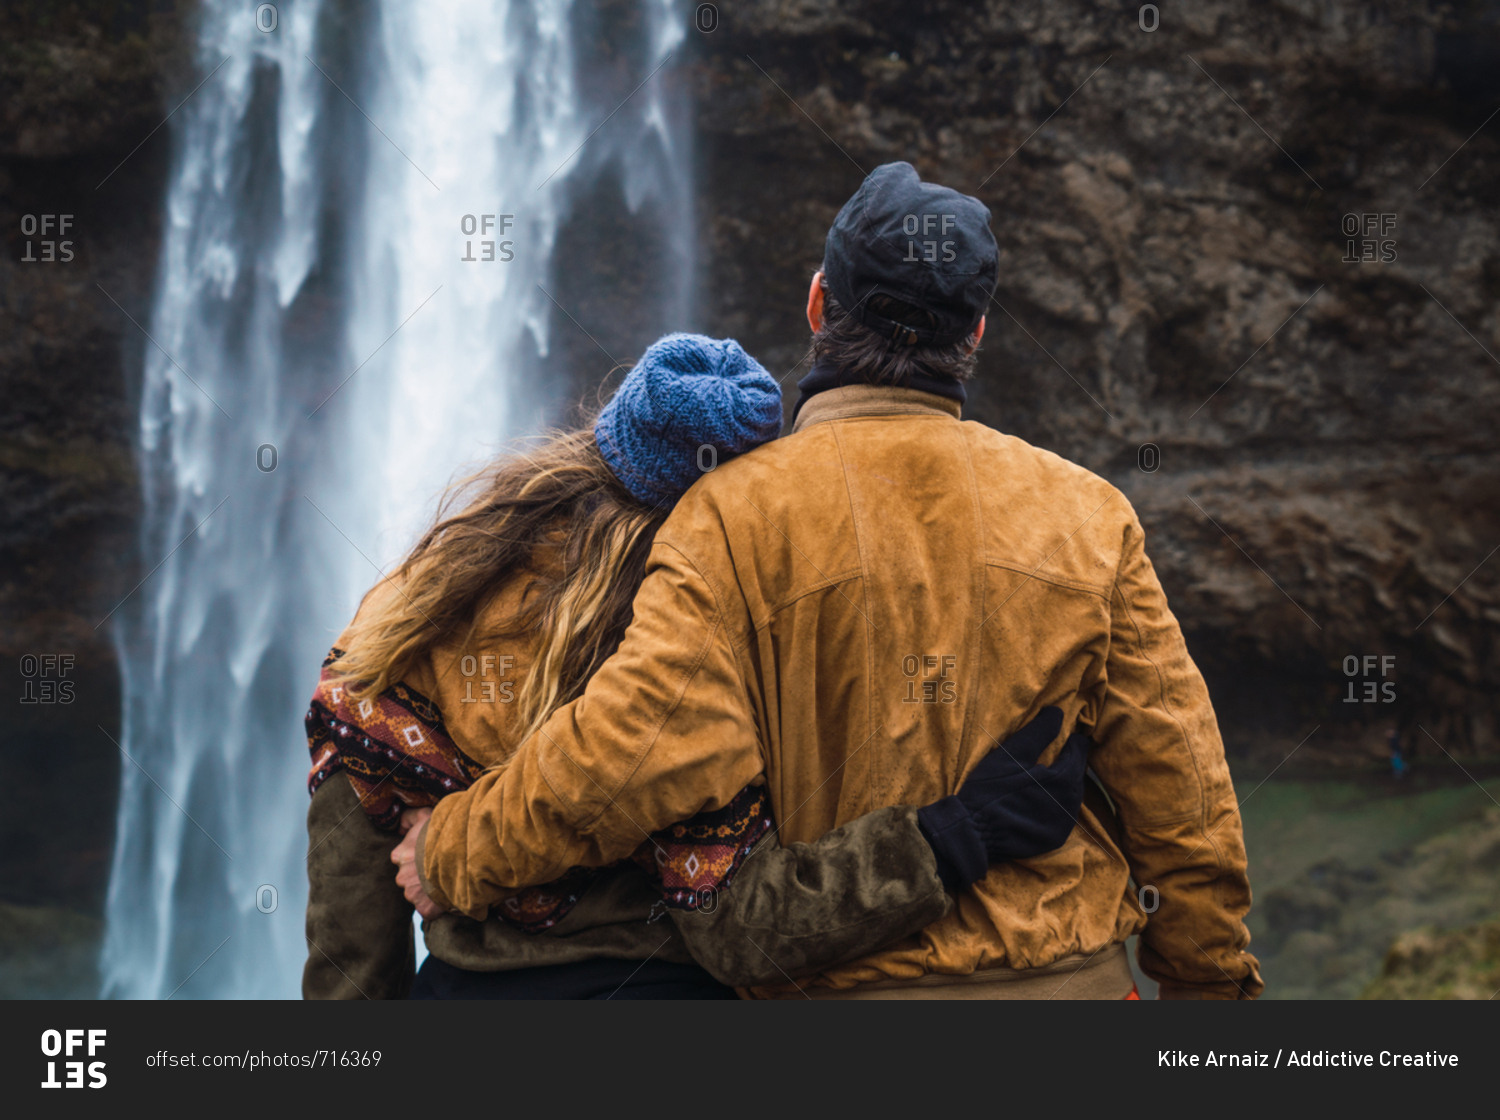 Waterfall Photoshoot Ideas - Lemon8 Search